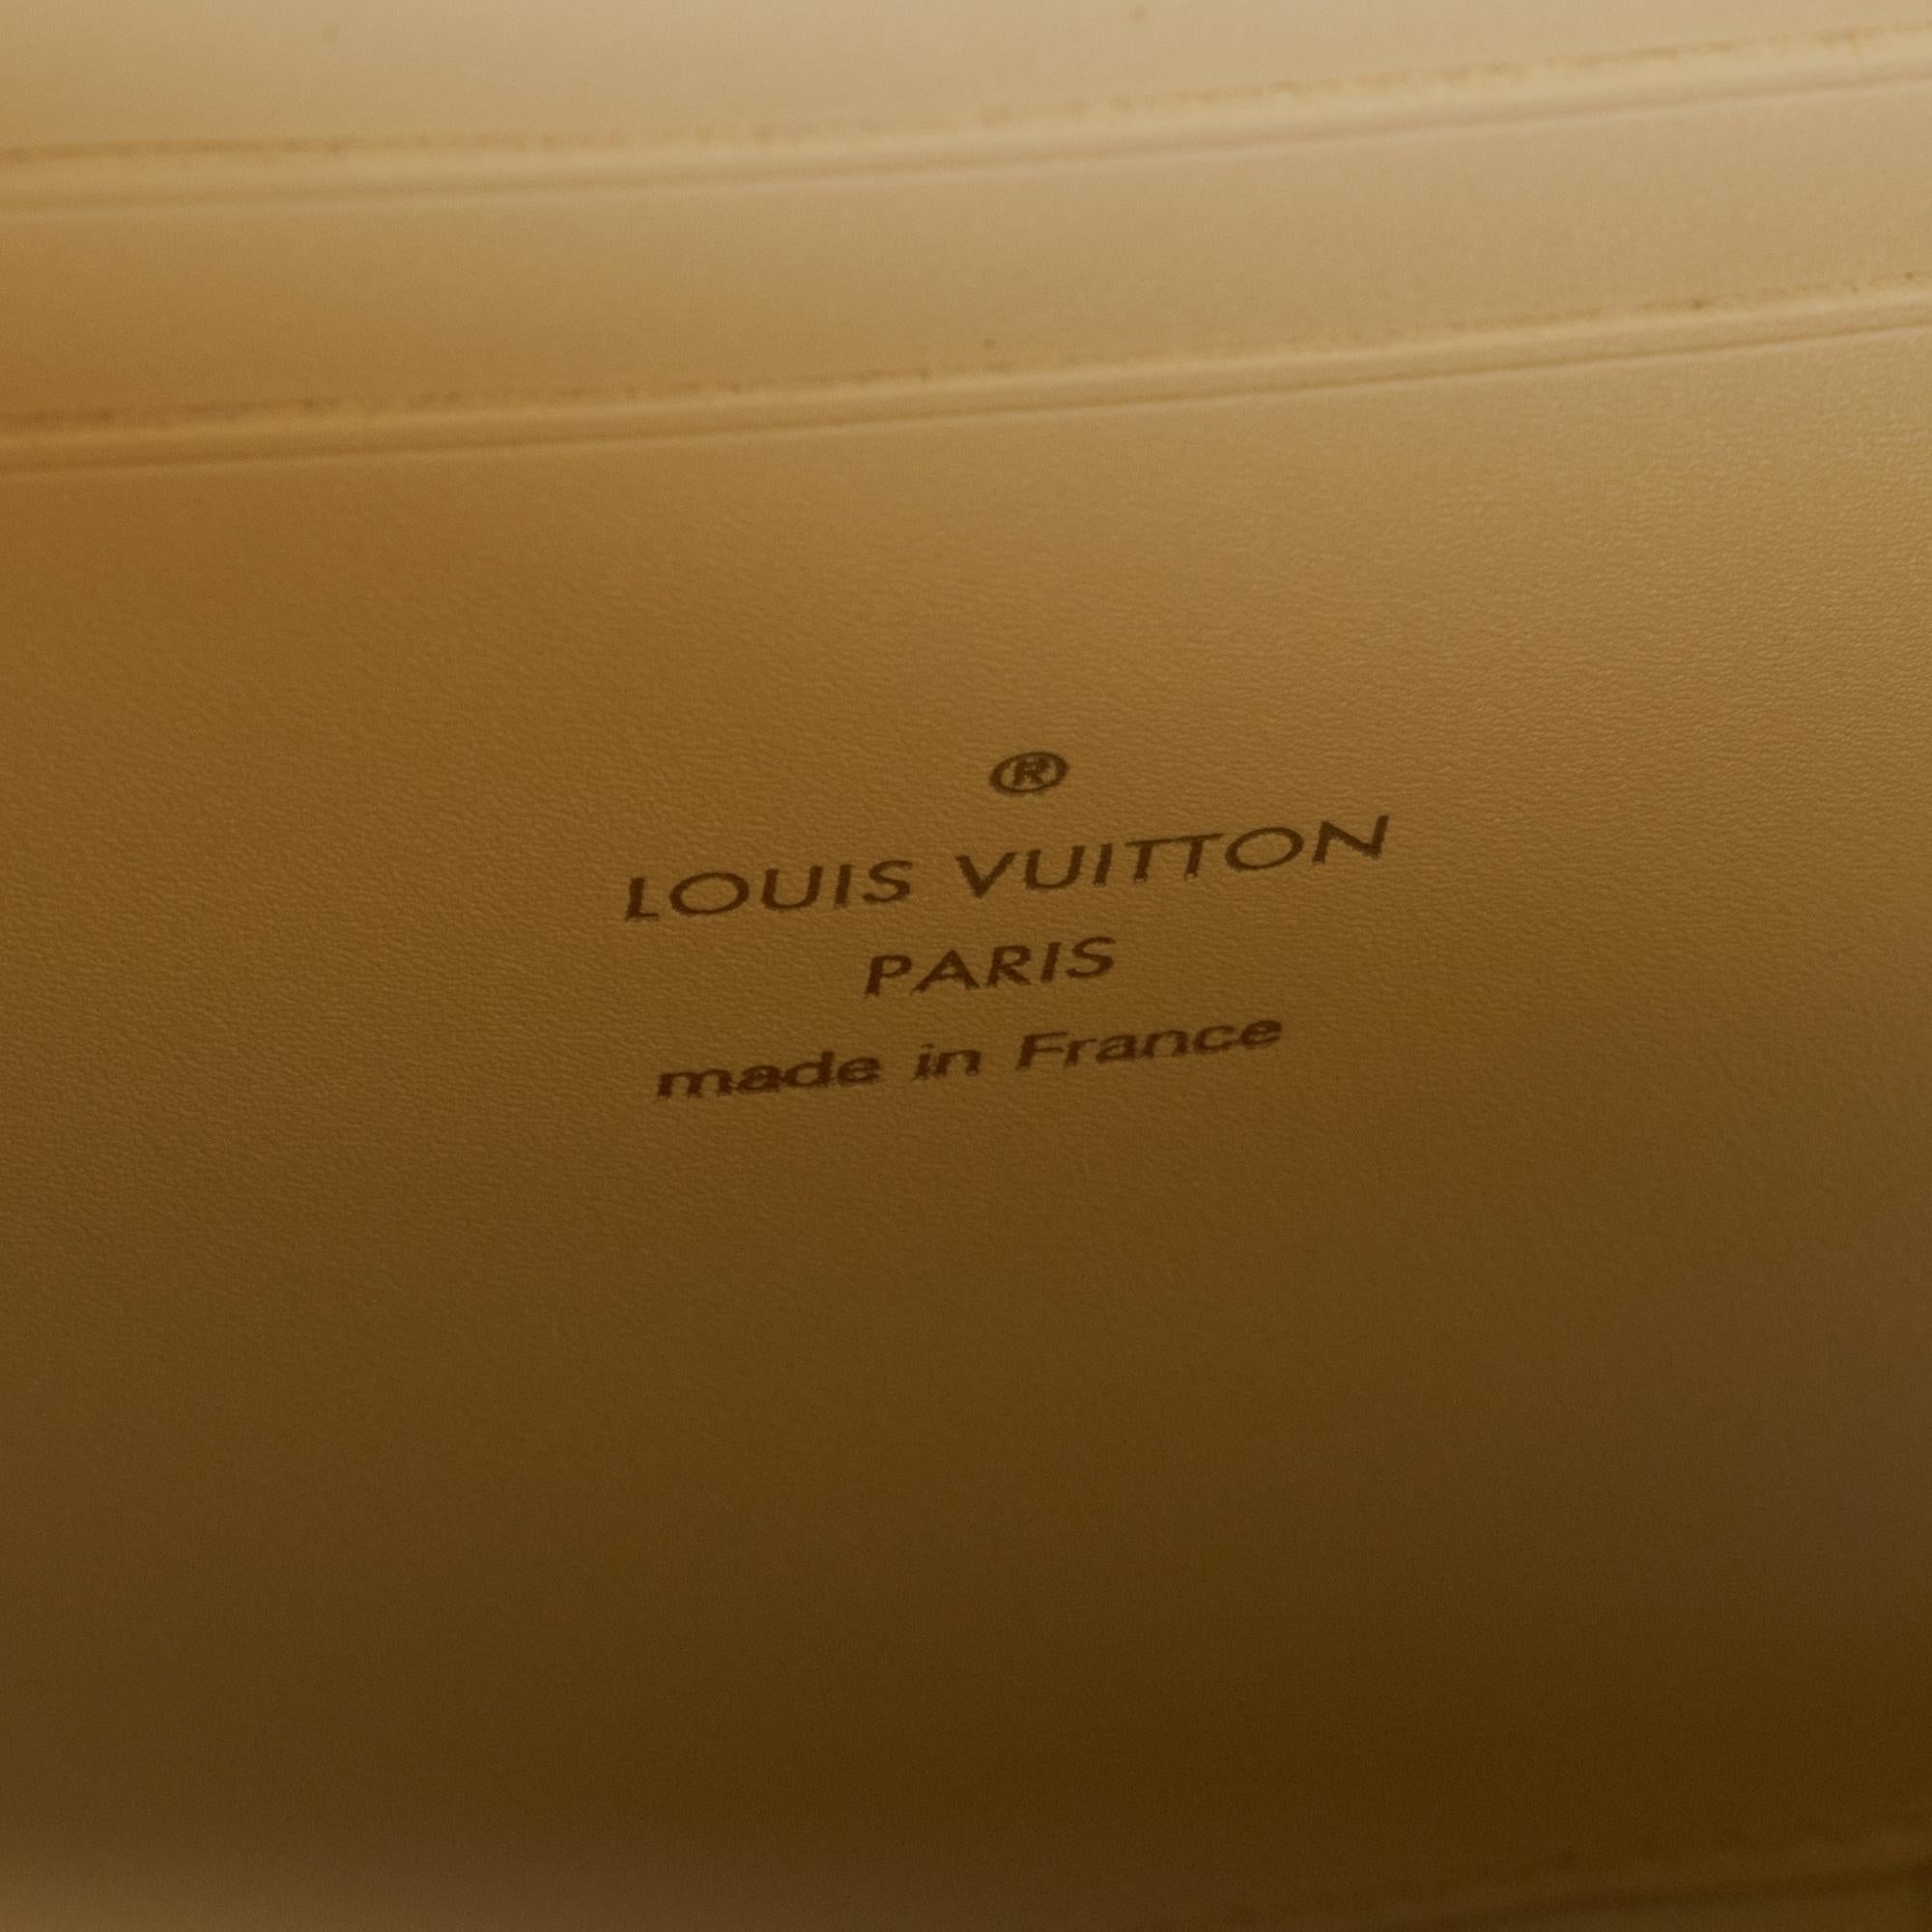 BRAND NEW - Louis Vuitton Mini Trunk shoulder bag in monogram canvas 1